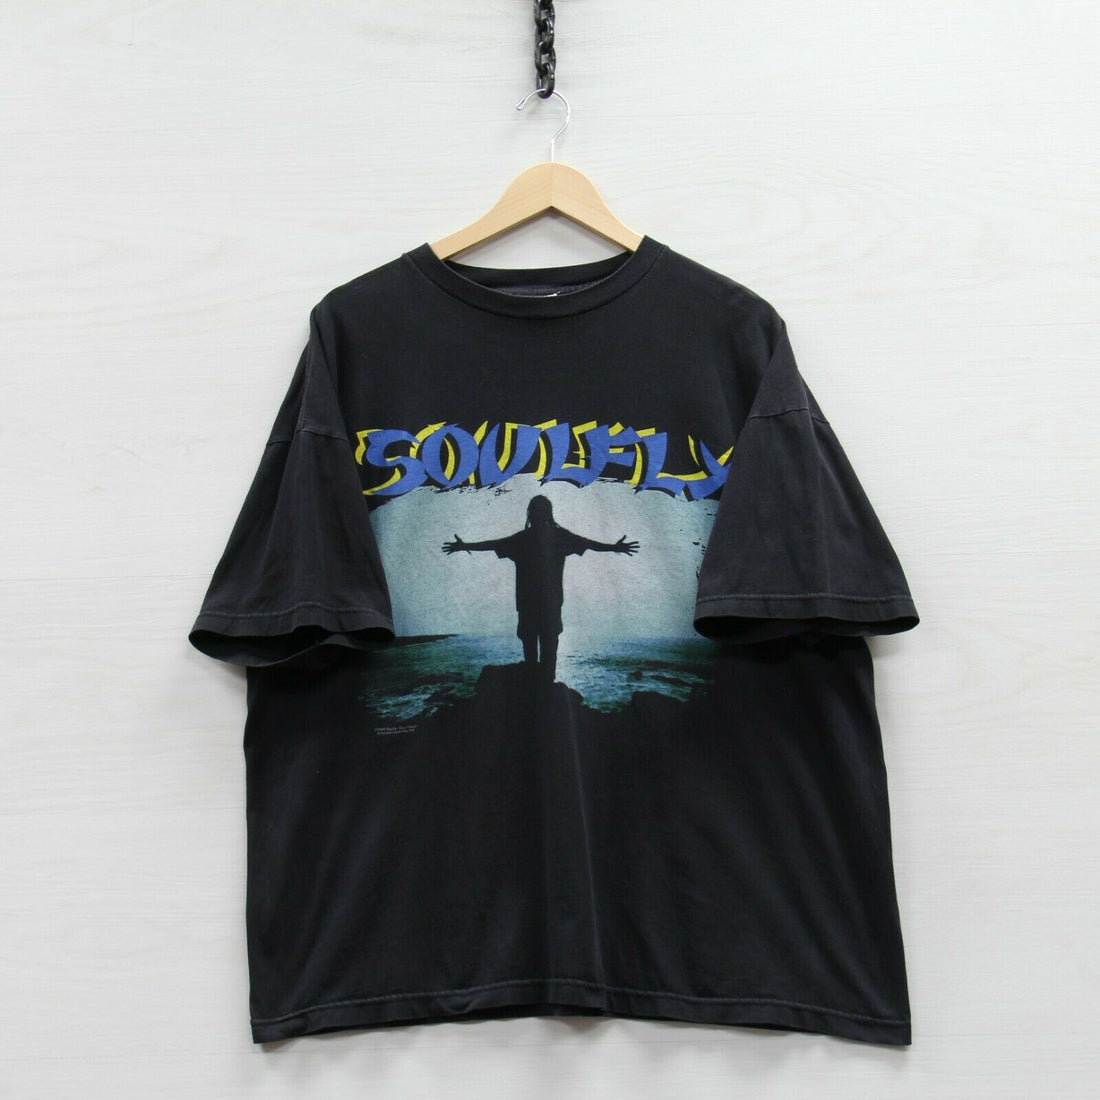 Vintage 1998 Soulfly Album Blue Grape T-Shirt XL 90s Heavy Metal Rock Band Tee